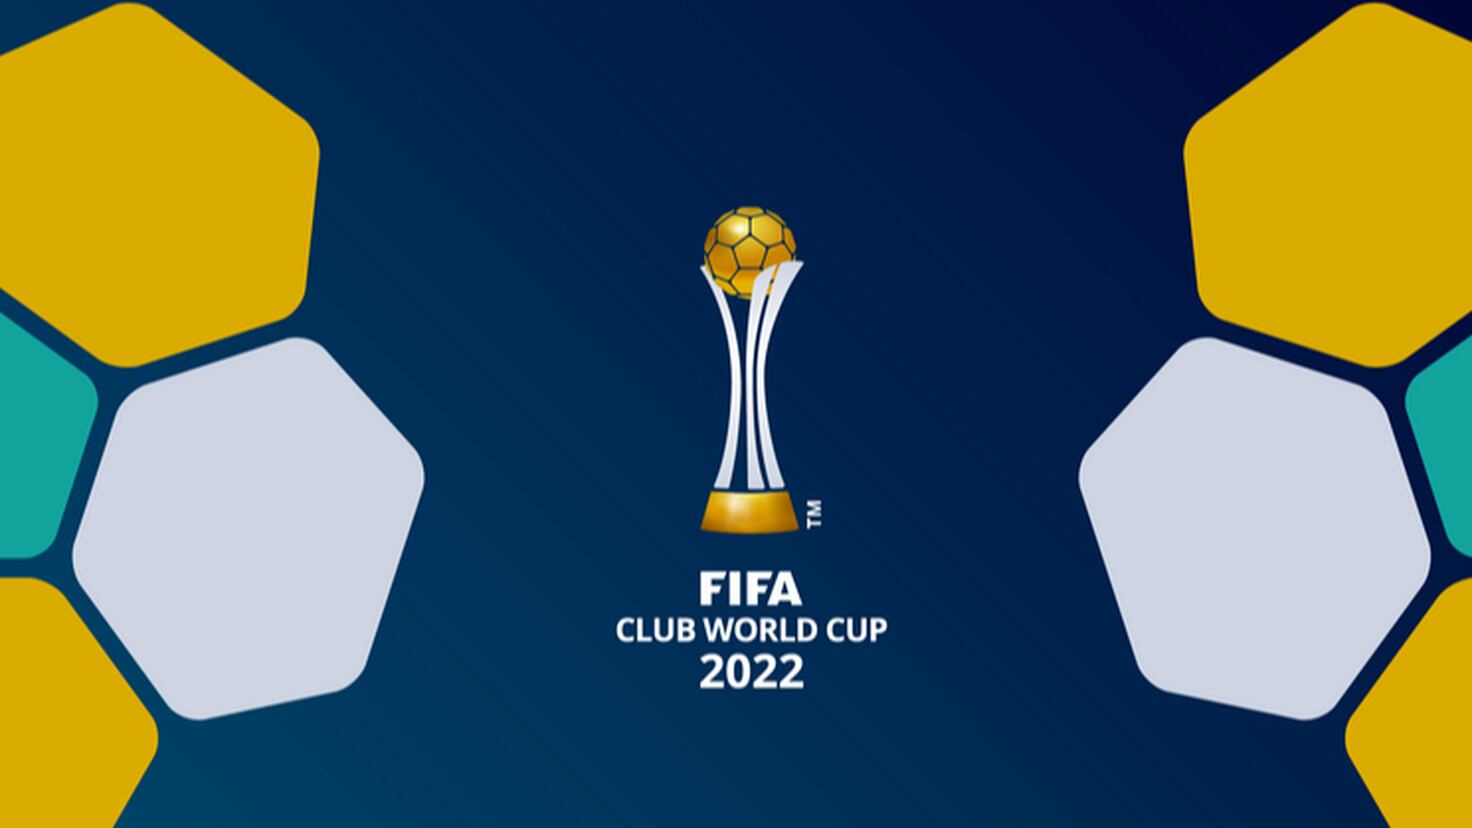 Real Soccer League Football Fun Games 2023: World Championship